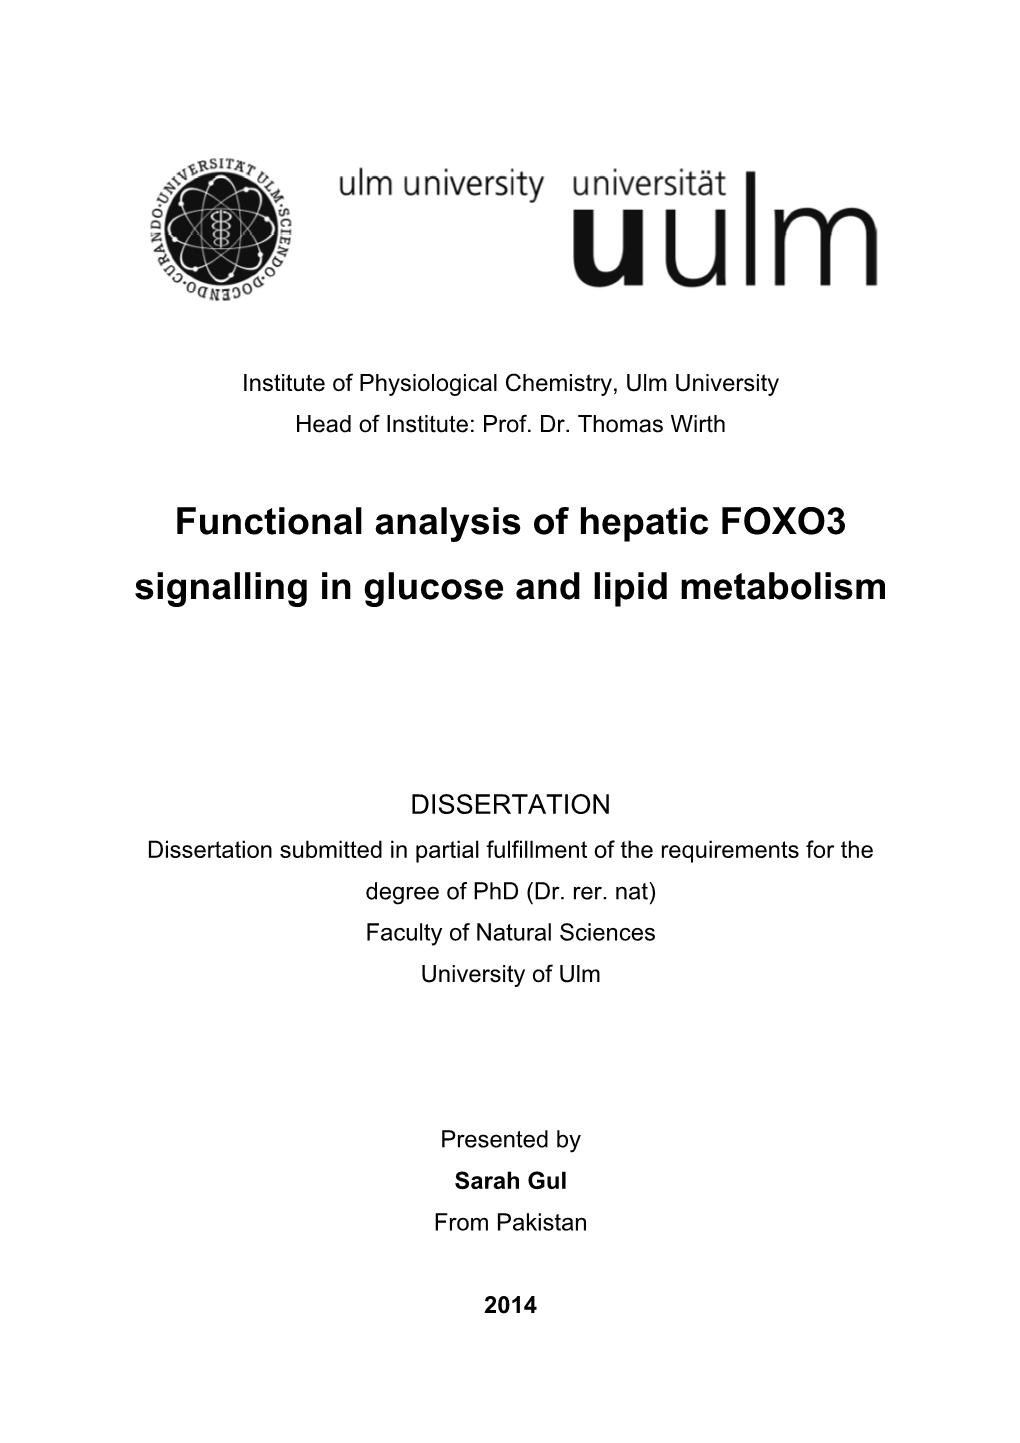 Functional Analysis of Hepatic FOXO3 Signalling in Glucose and Lipid Metabolism